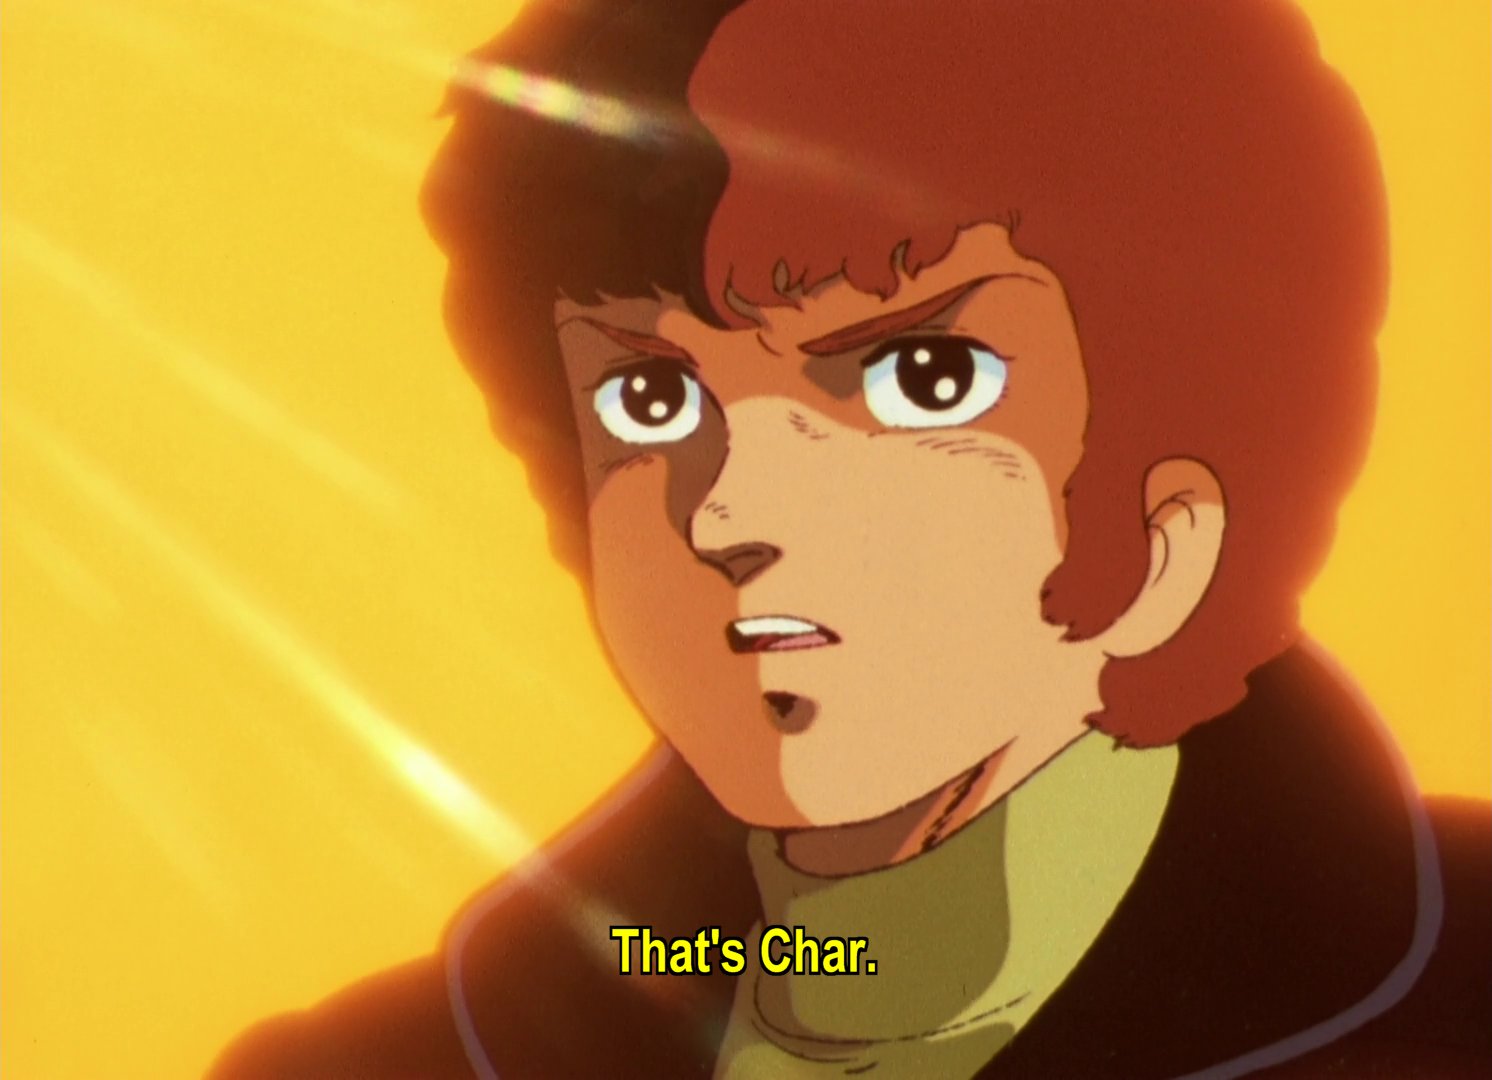 Amuro: That's Char.